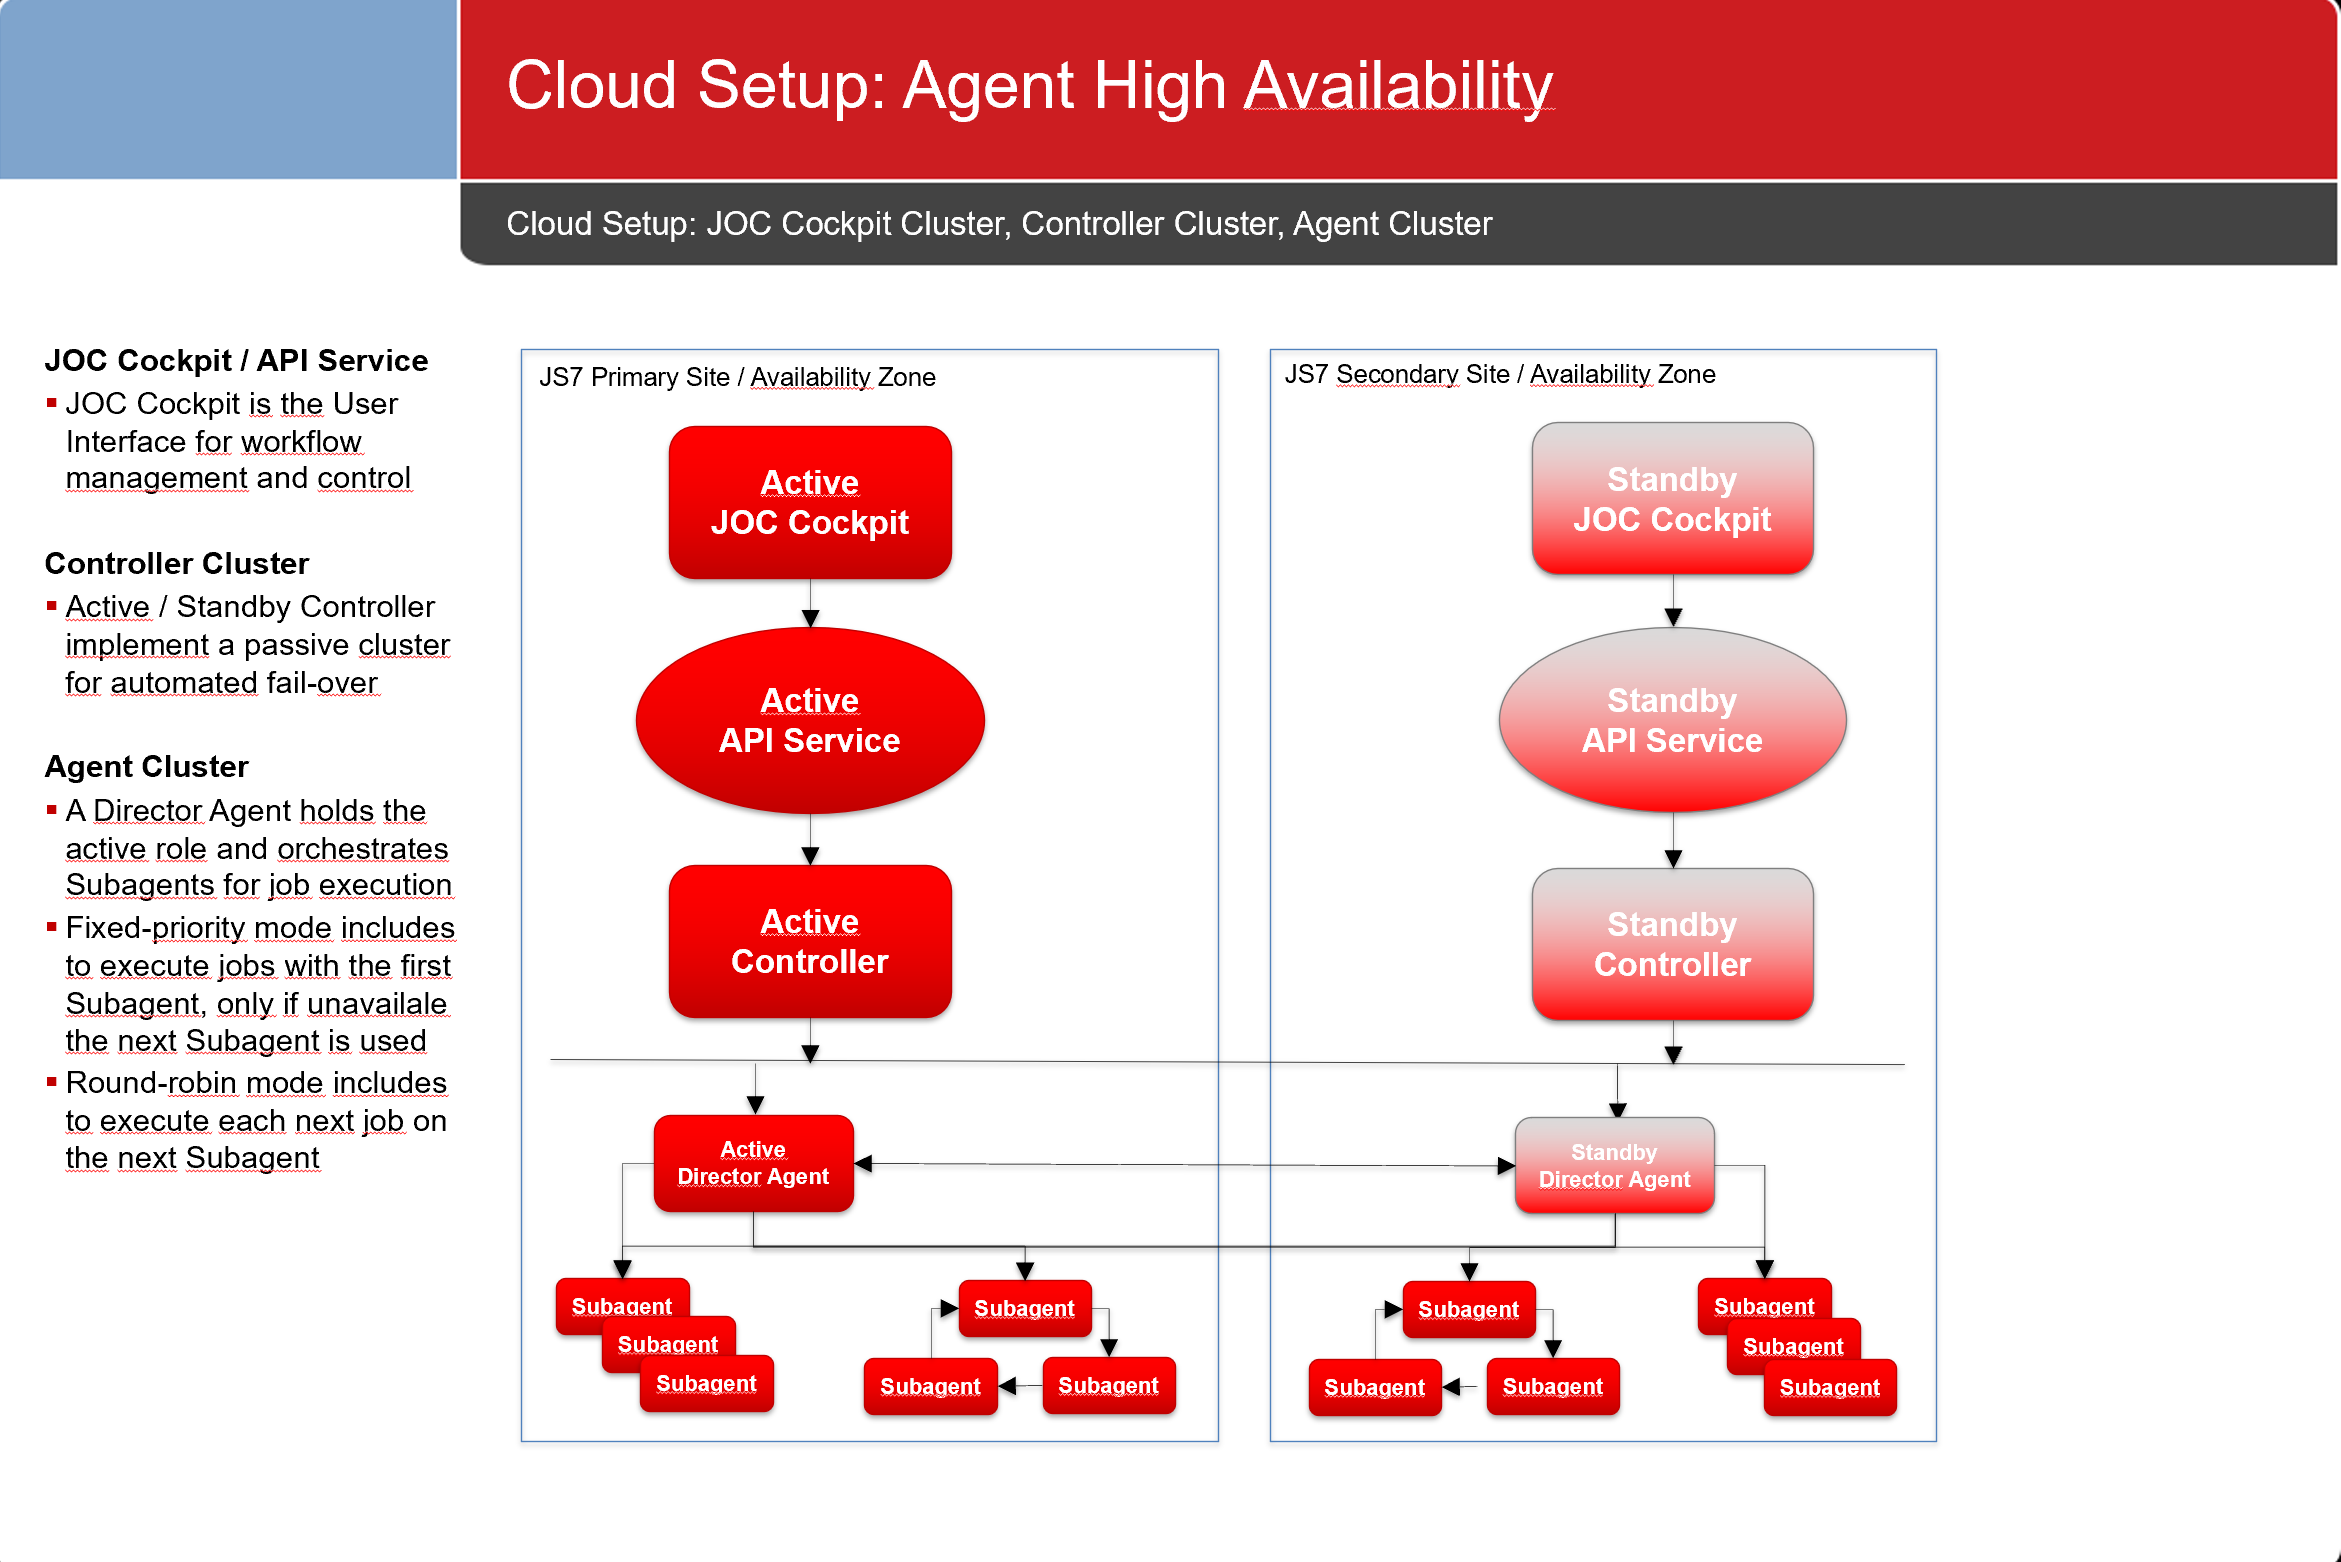 Cloud Setup for Agent High availability